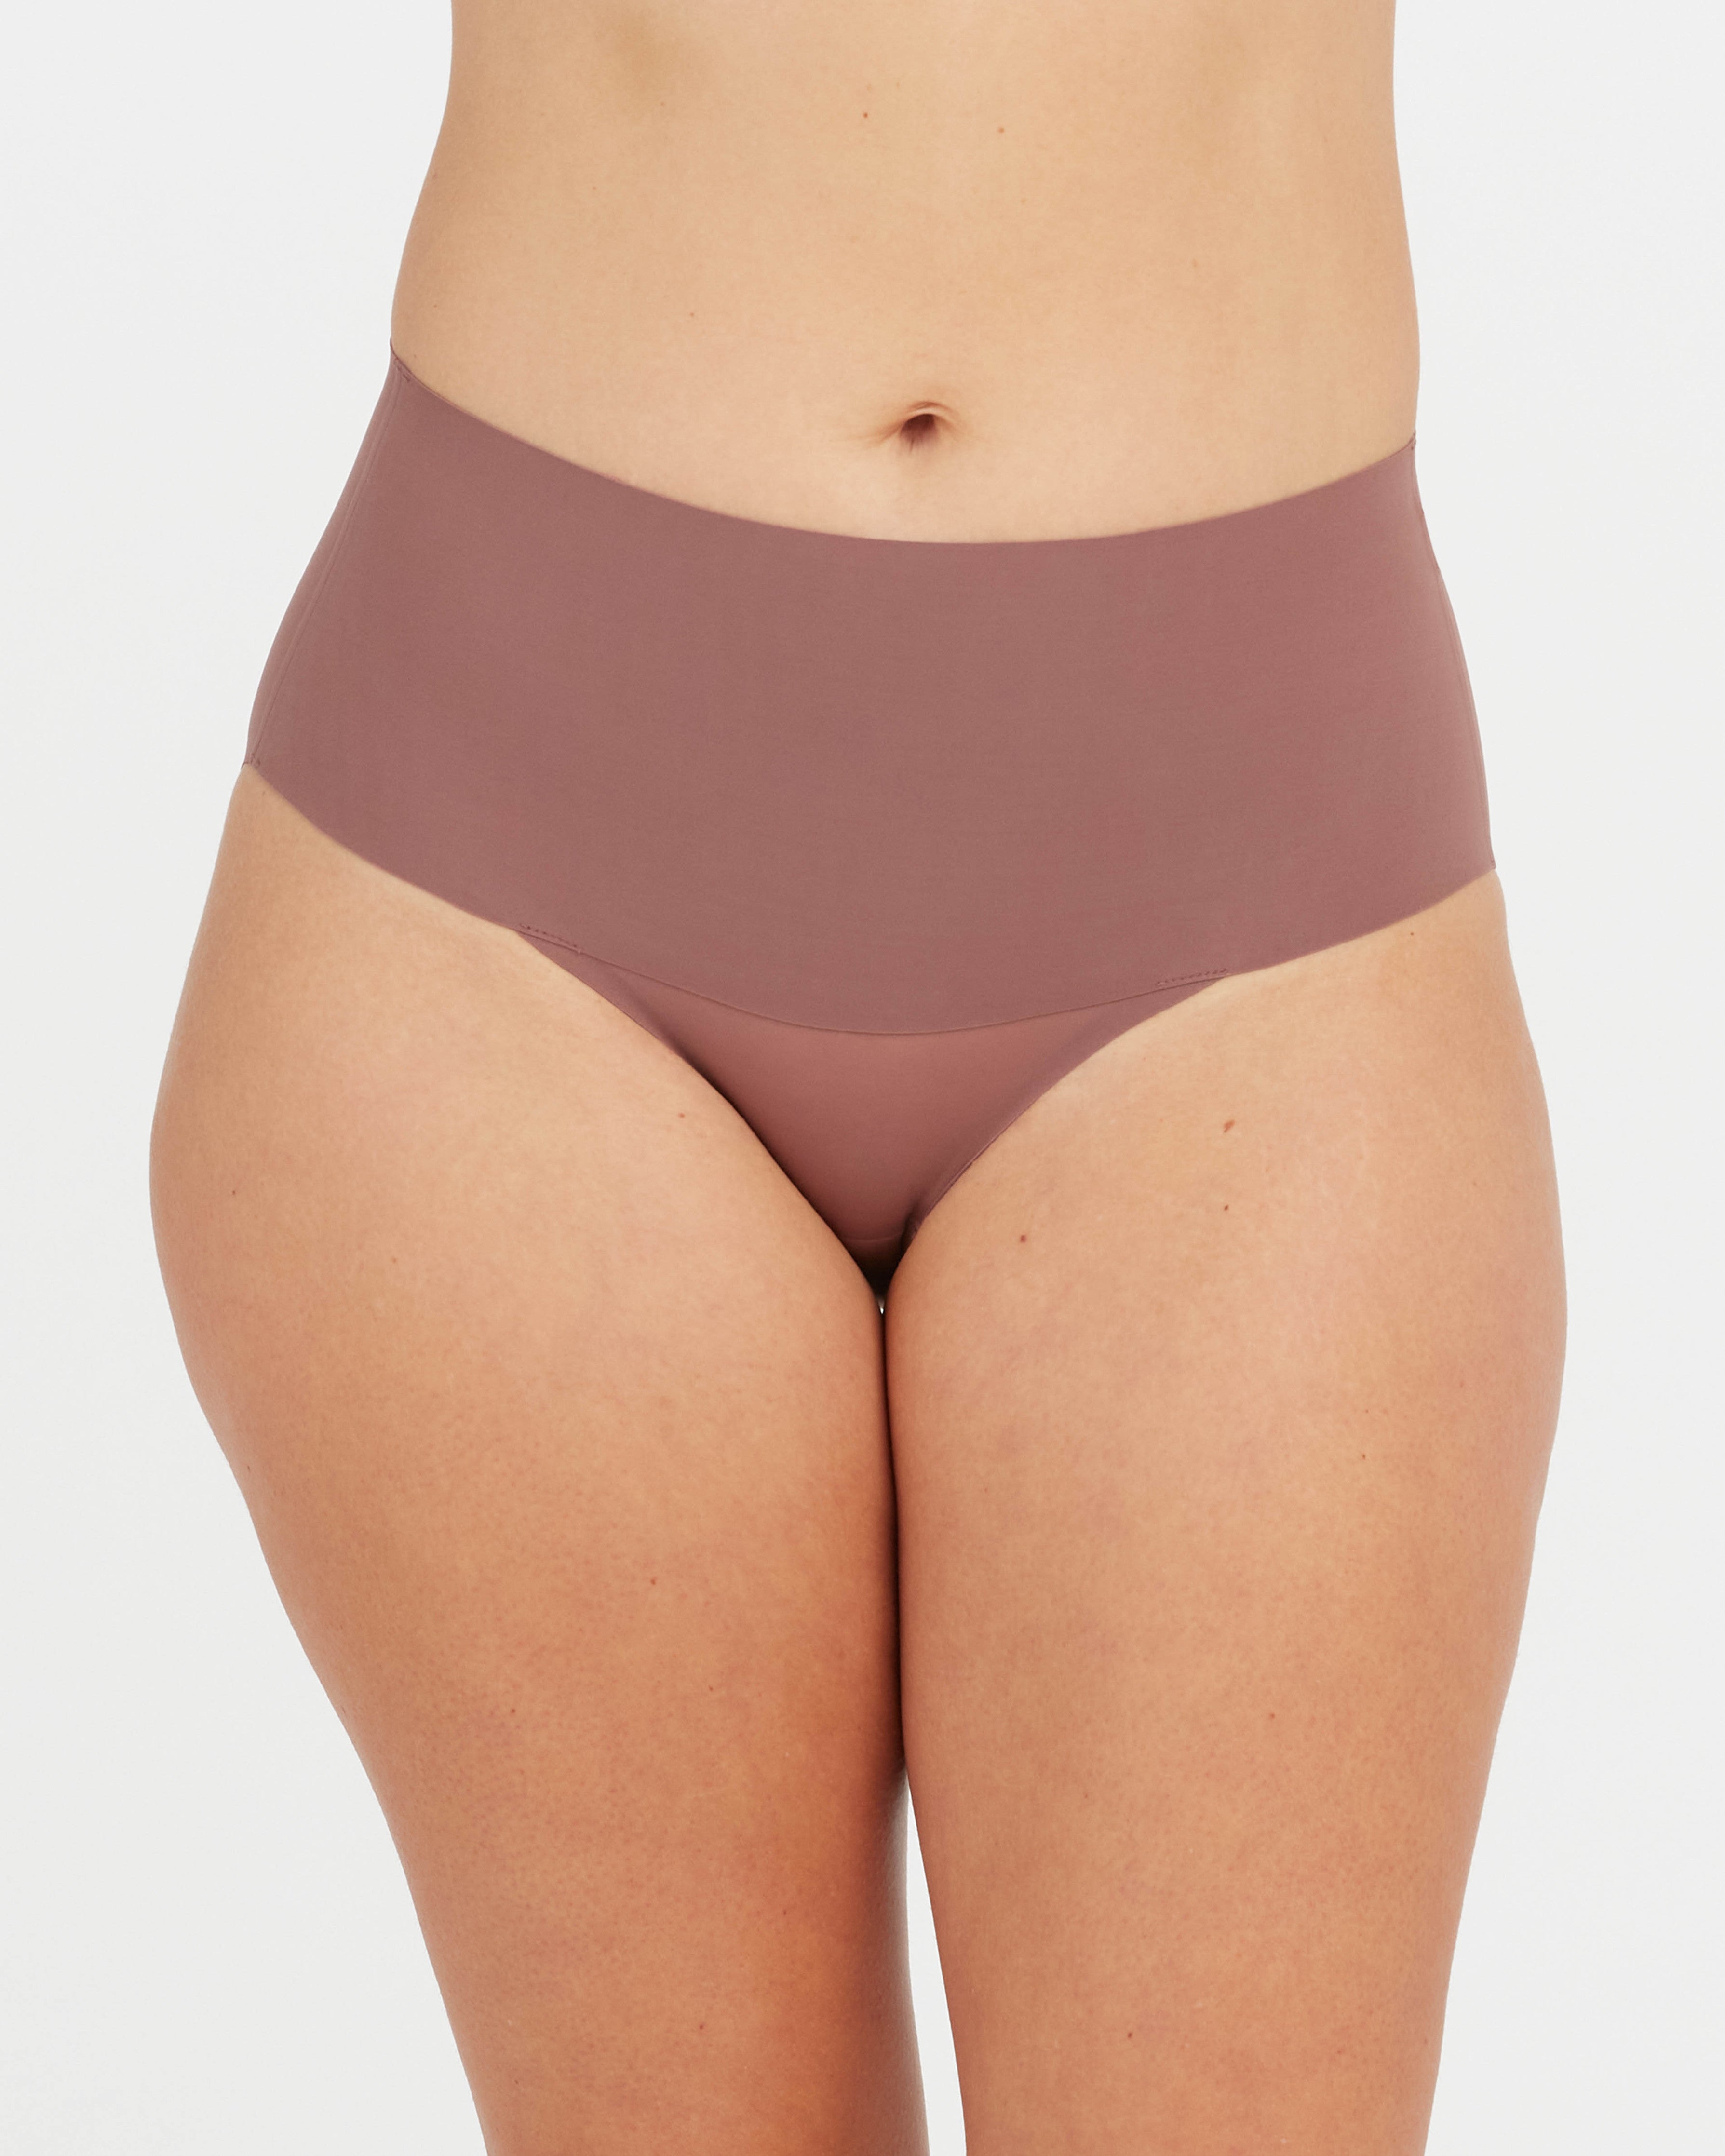 Tawop Women'S Underwear Thin Large Size No Sponge Side Collection